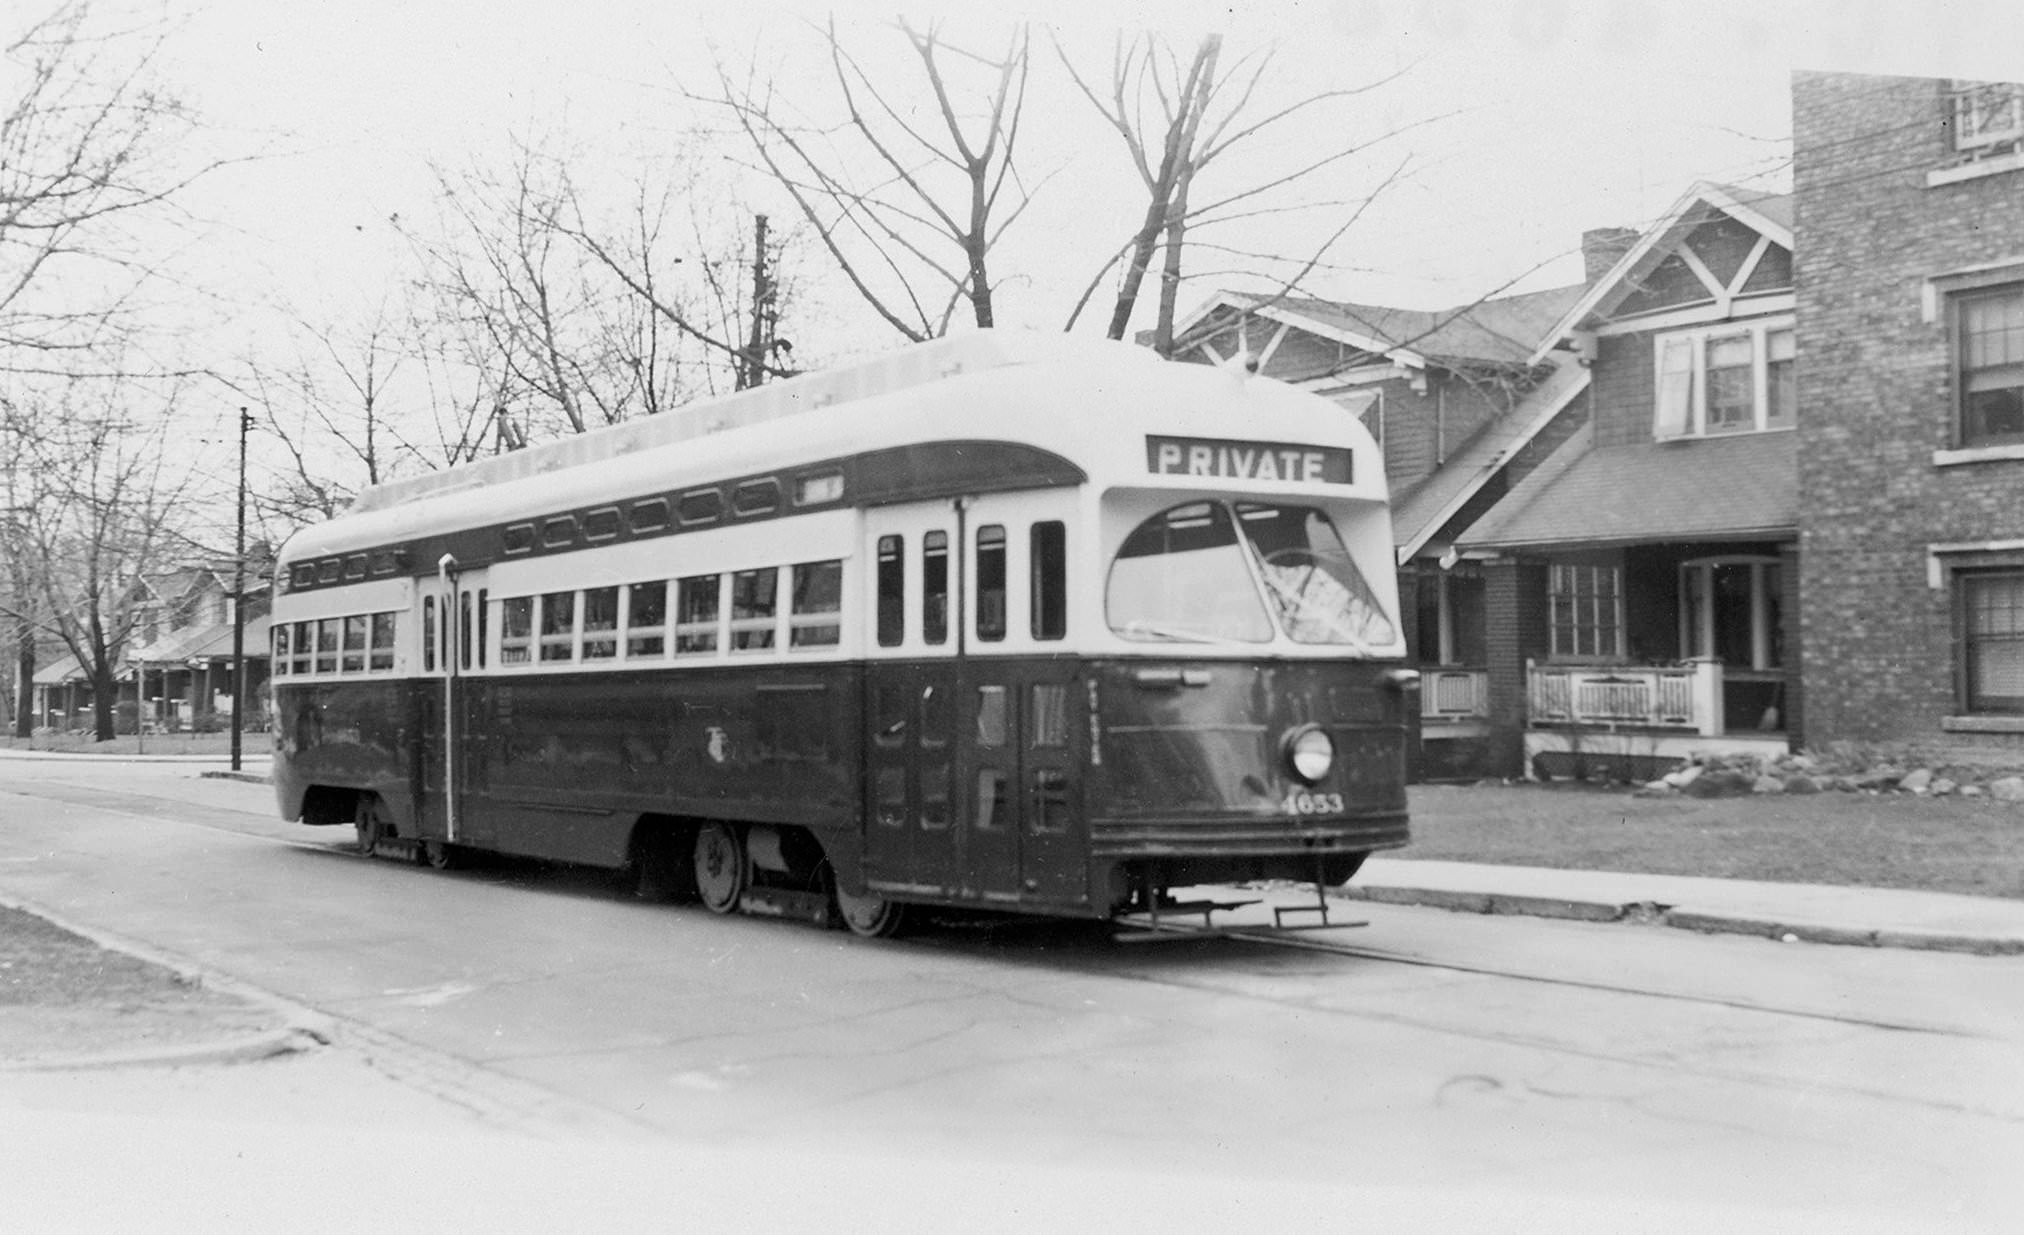 TTC Charter streetcar on Maclean Ave. below Queen Street, 1953.